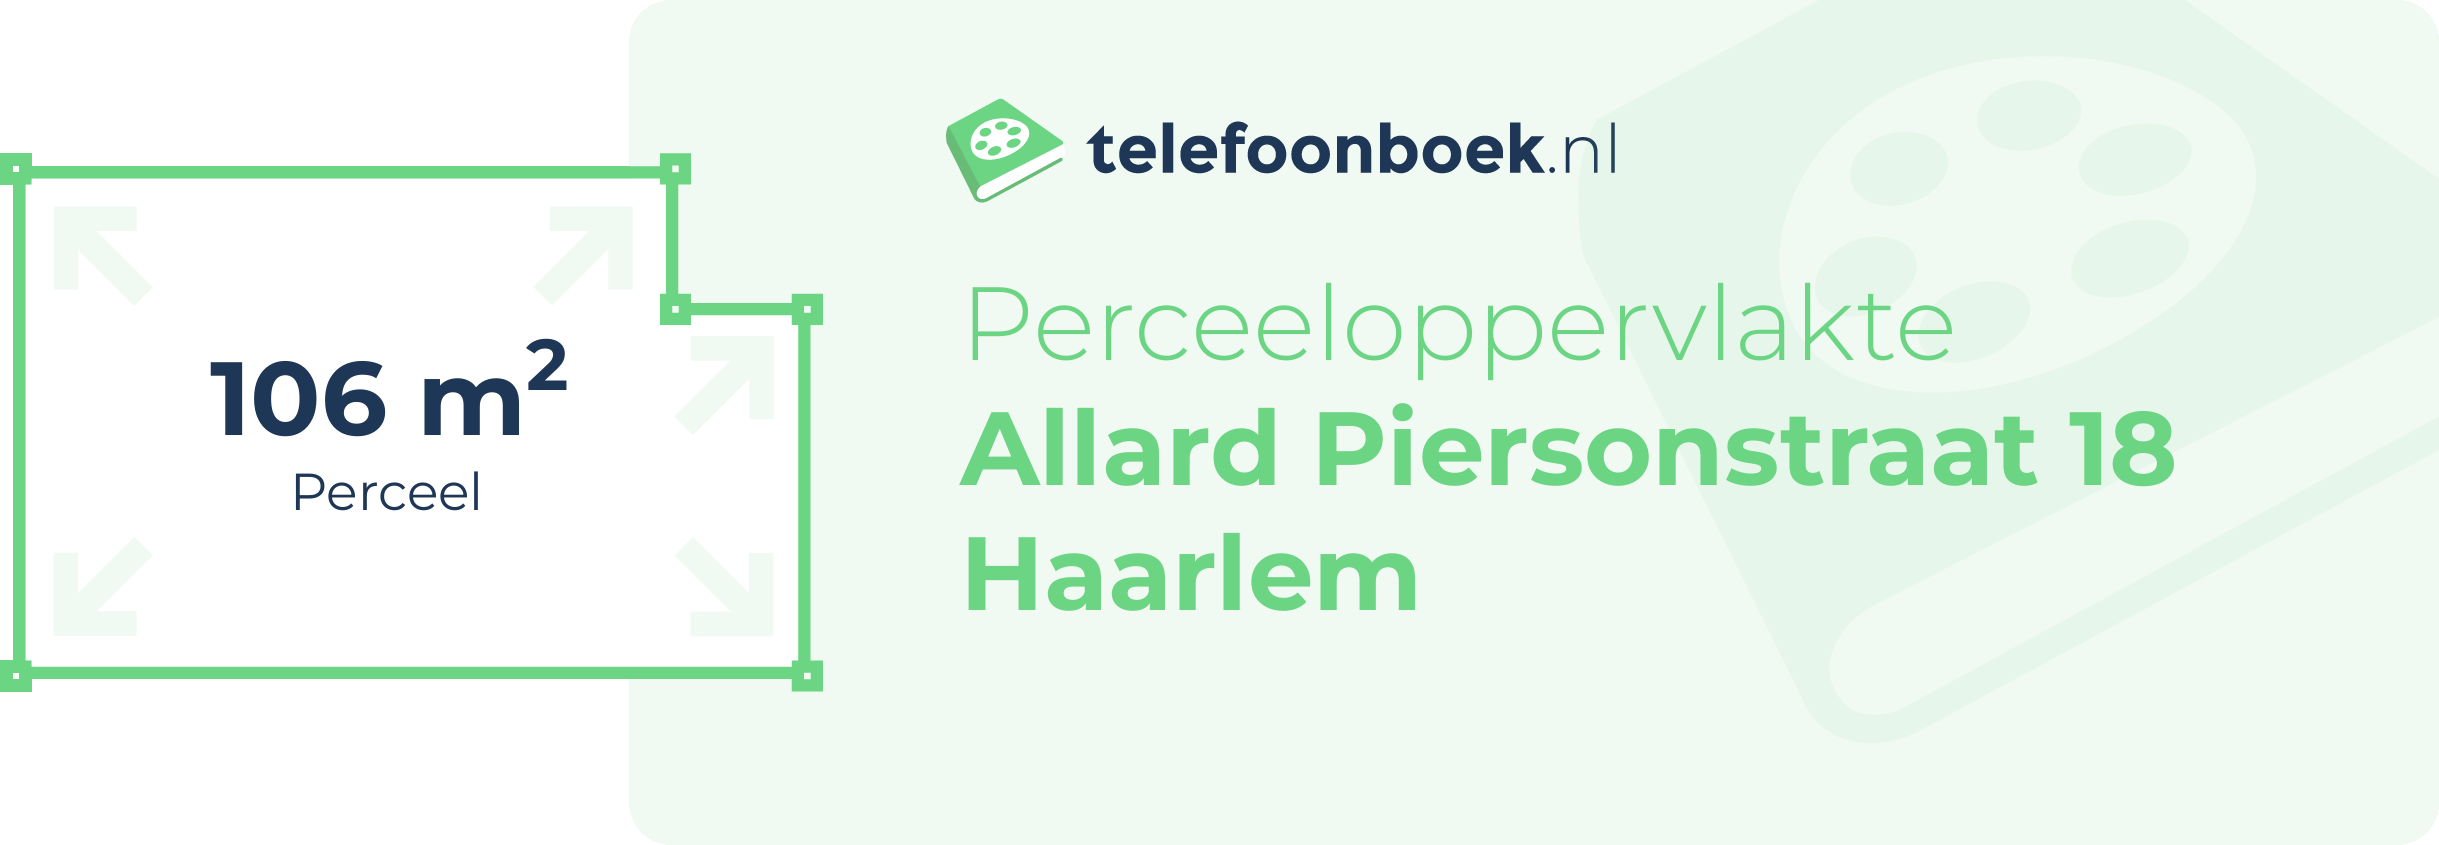 Perceeloppervlakte Allard Piersonstraat 18 Haarlem